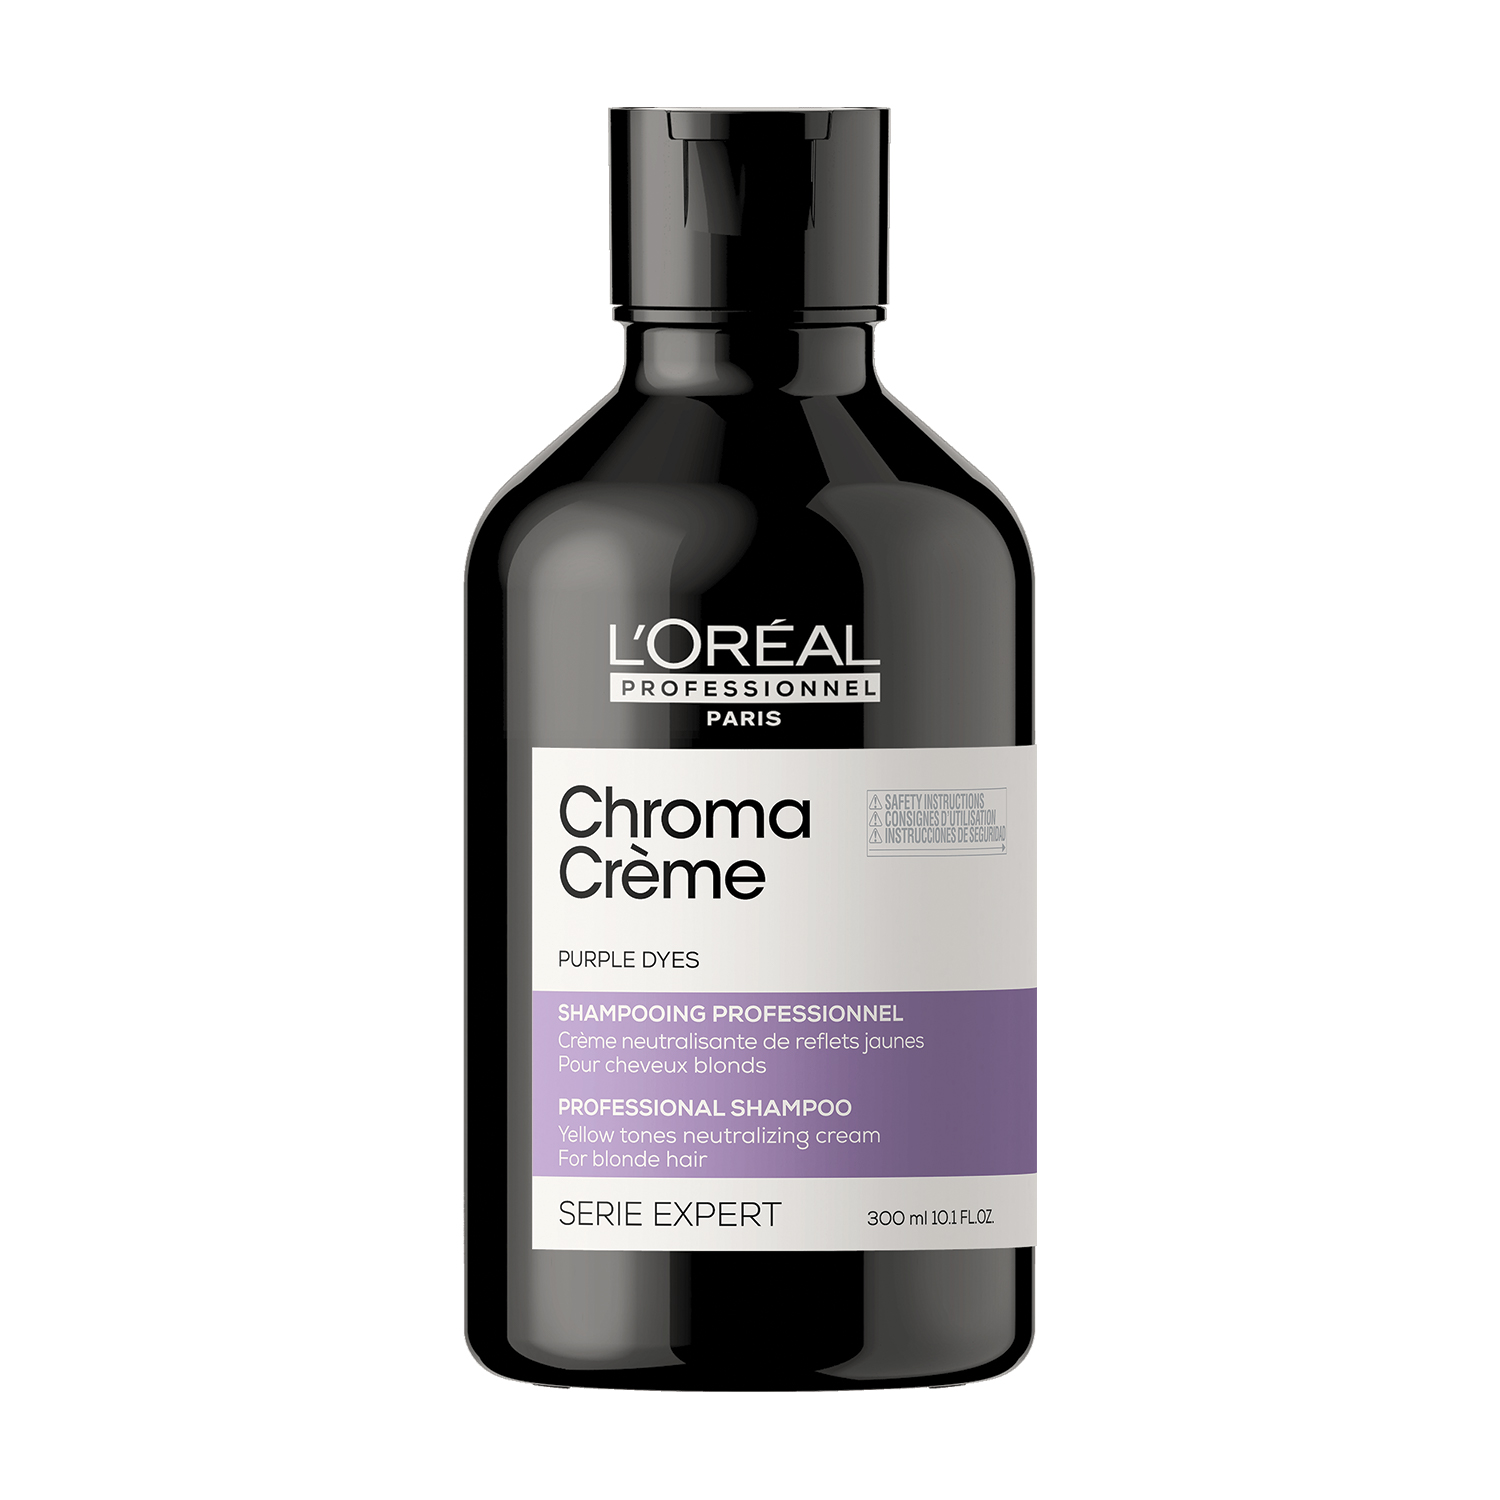 violeta - Chroma Crème | SERIE EXPERT | L'Oréal